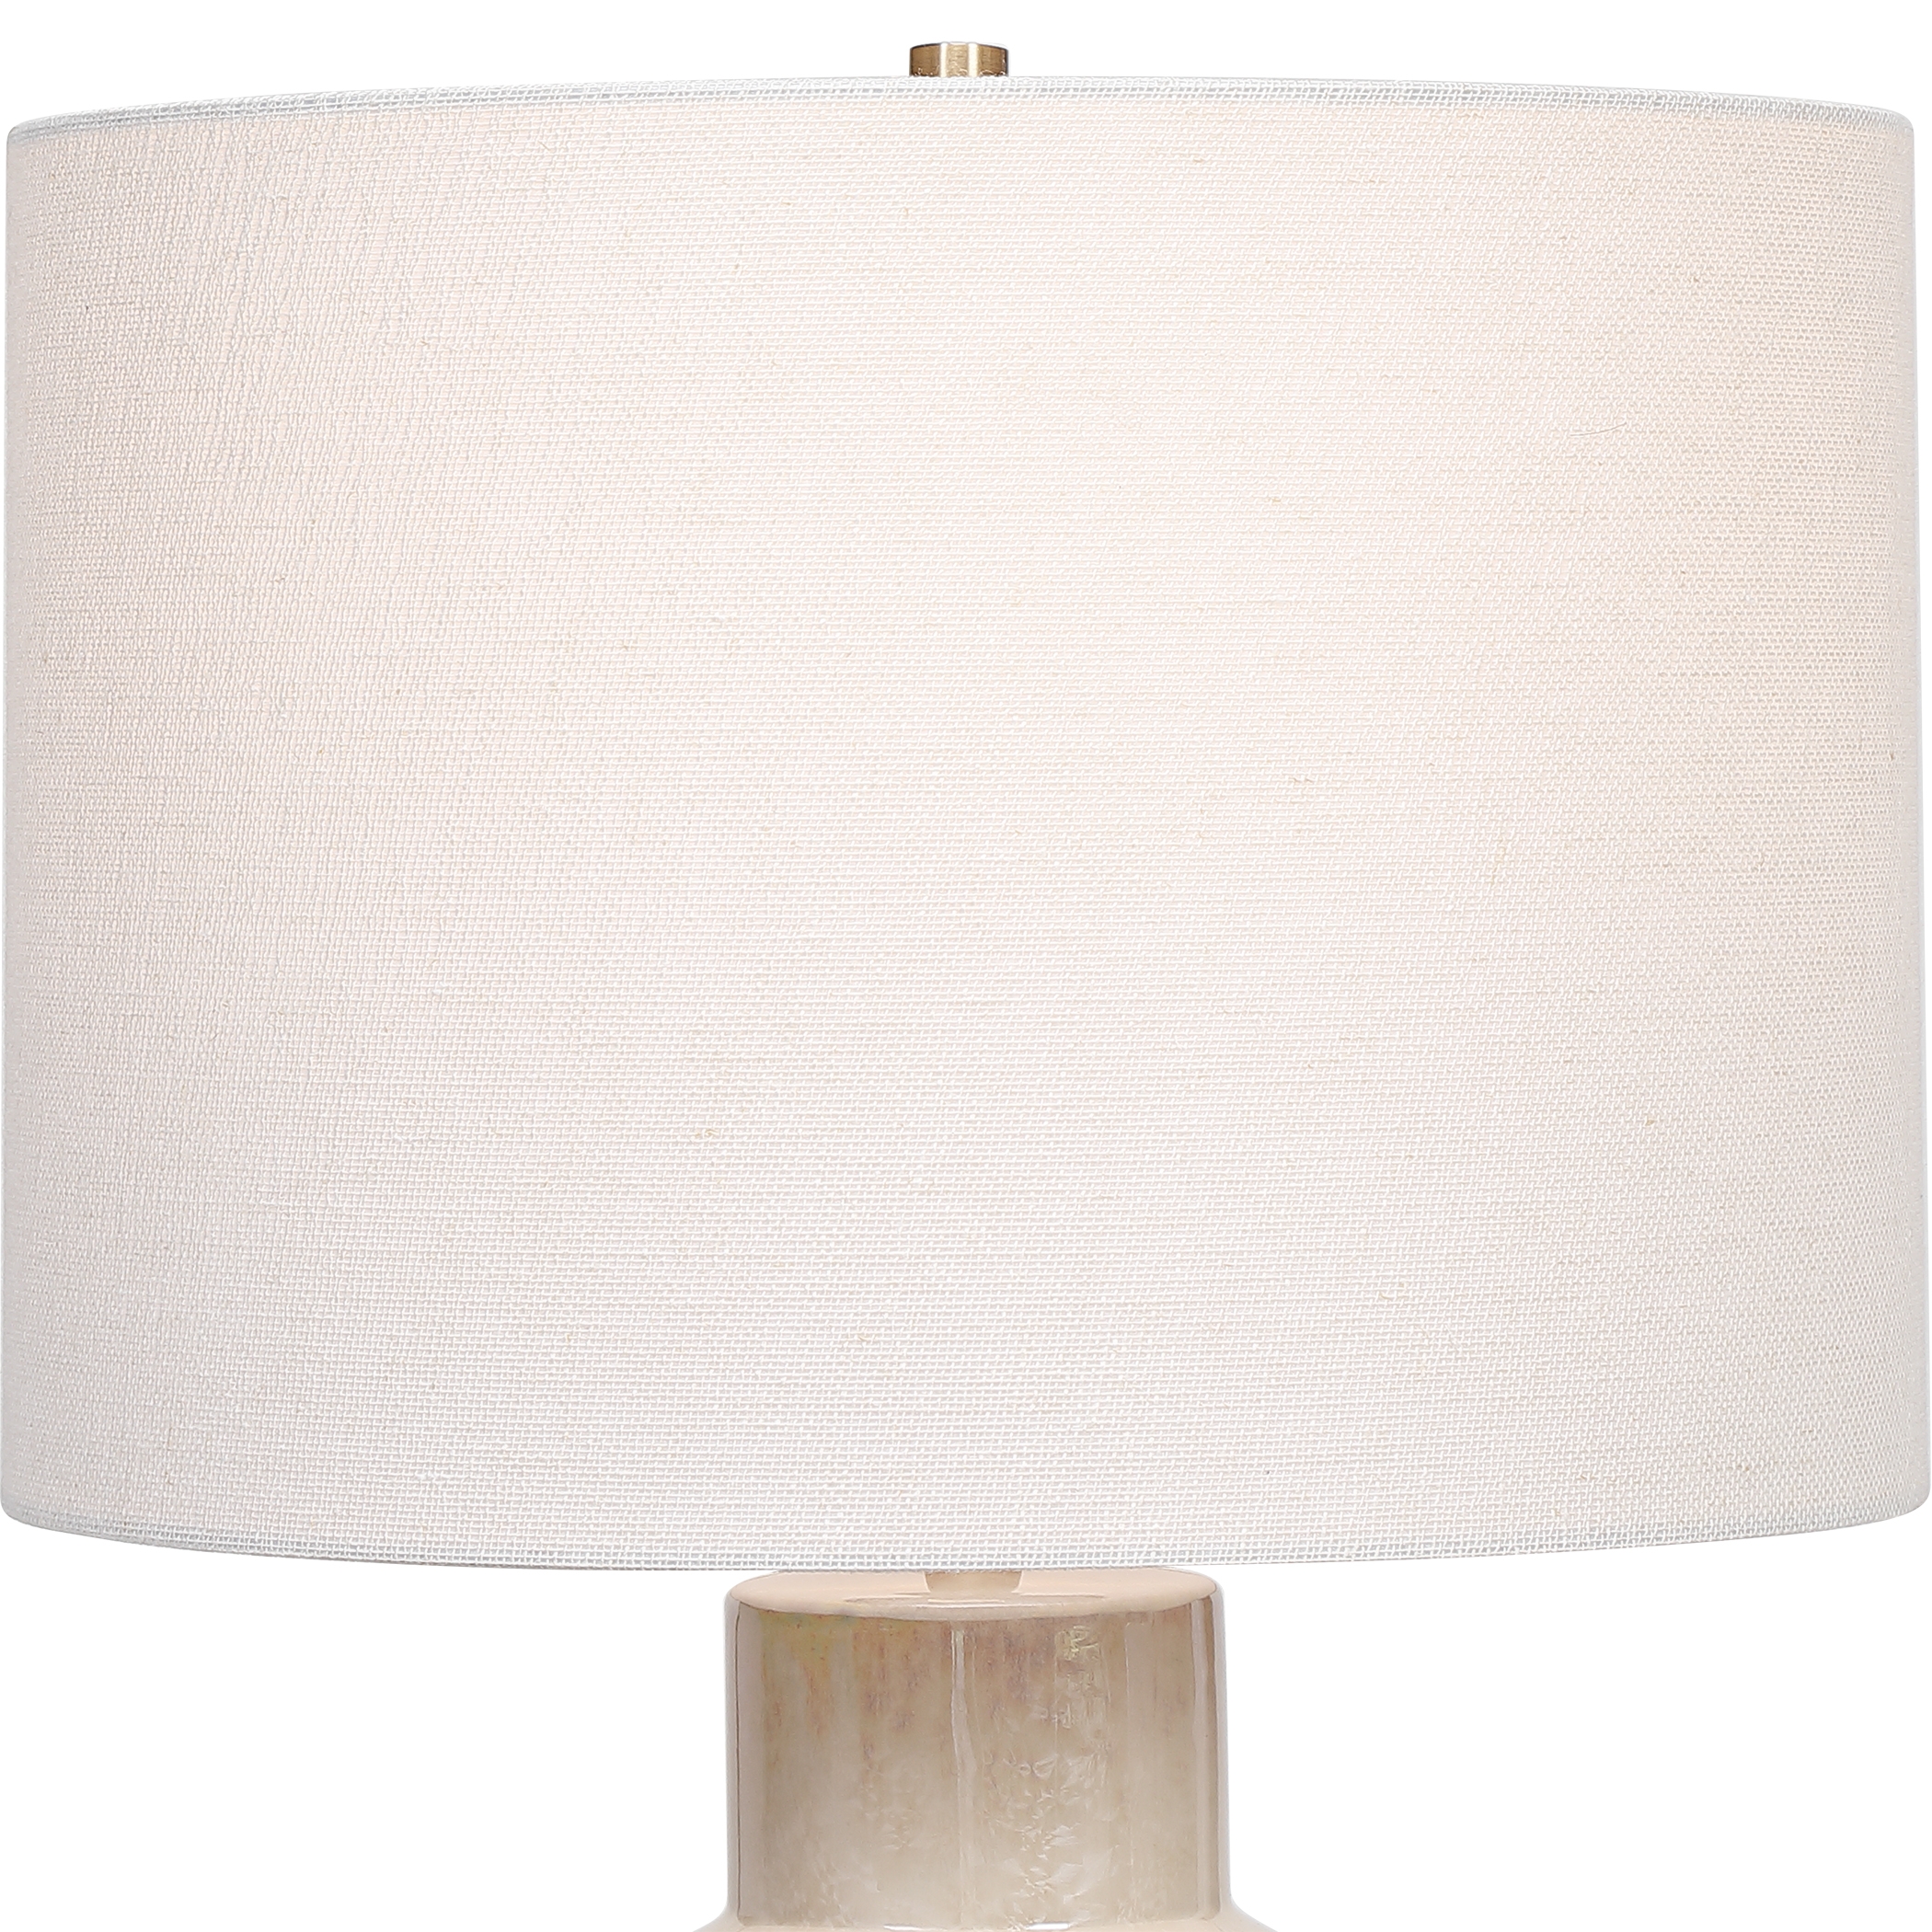 Iridescent Cream Table Lamp - Image 3